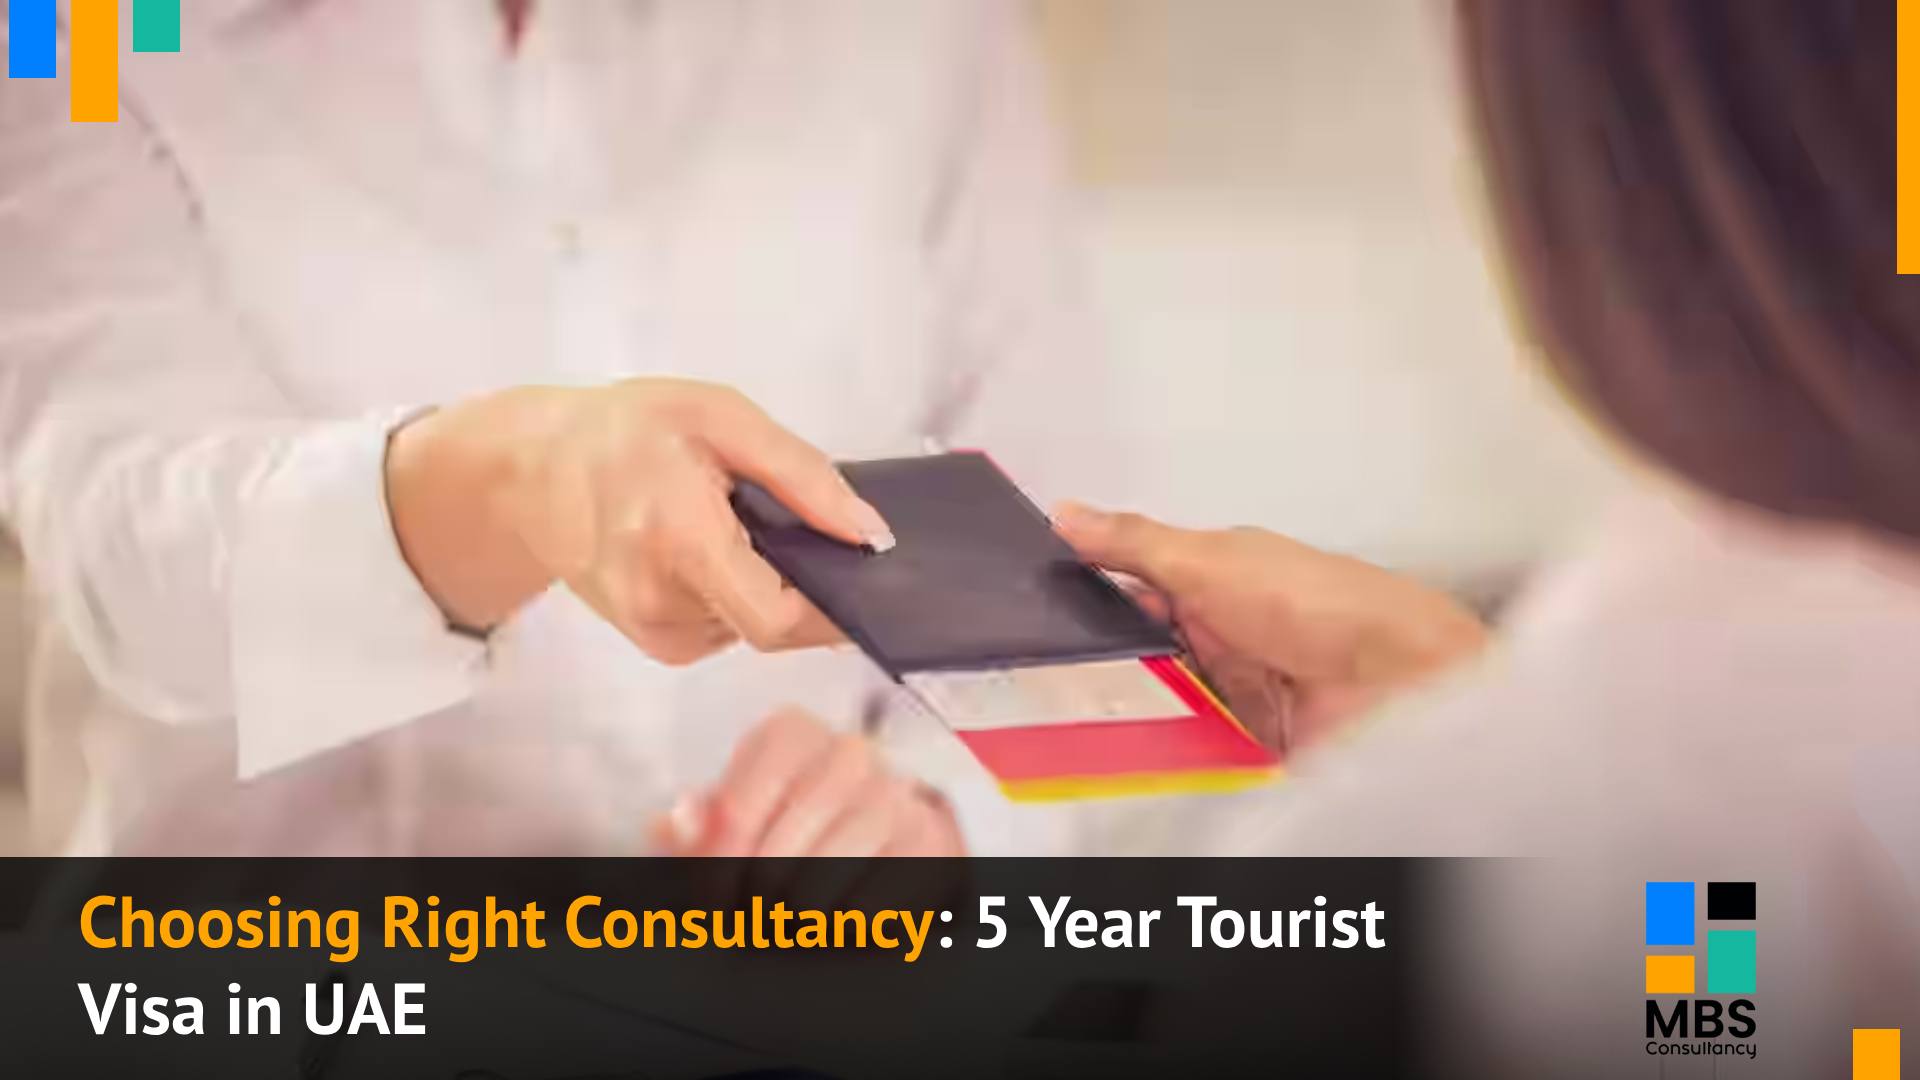 5 Year Tourist Visa UAE